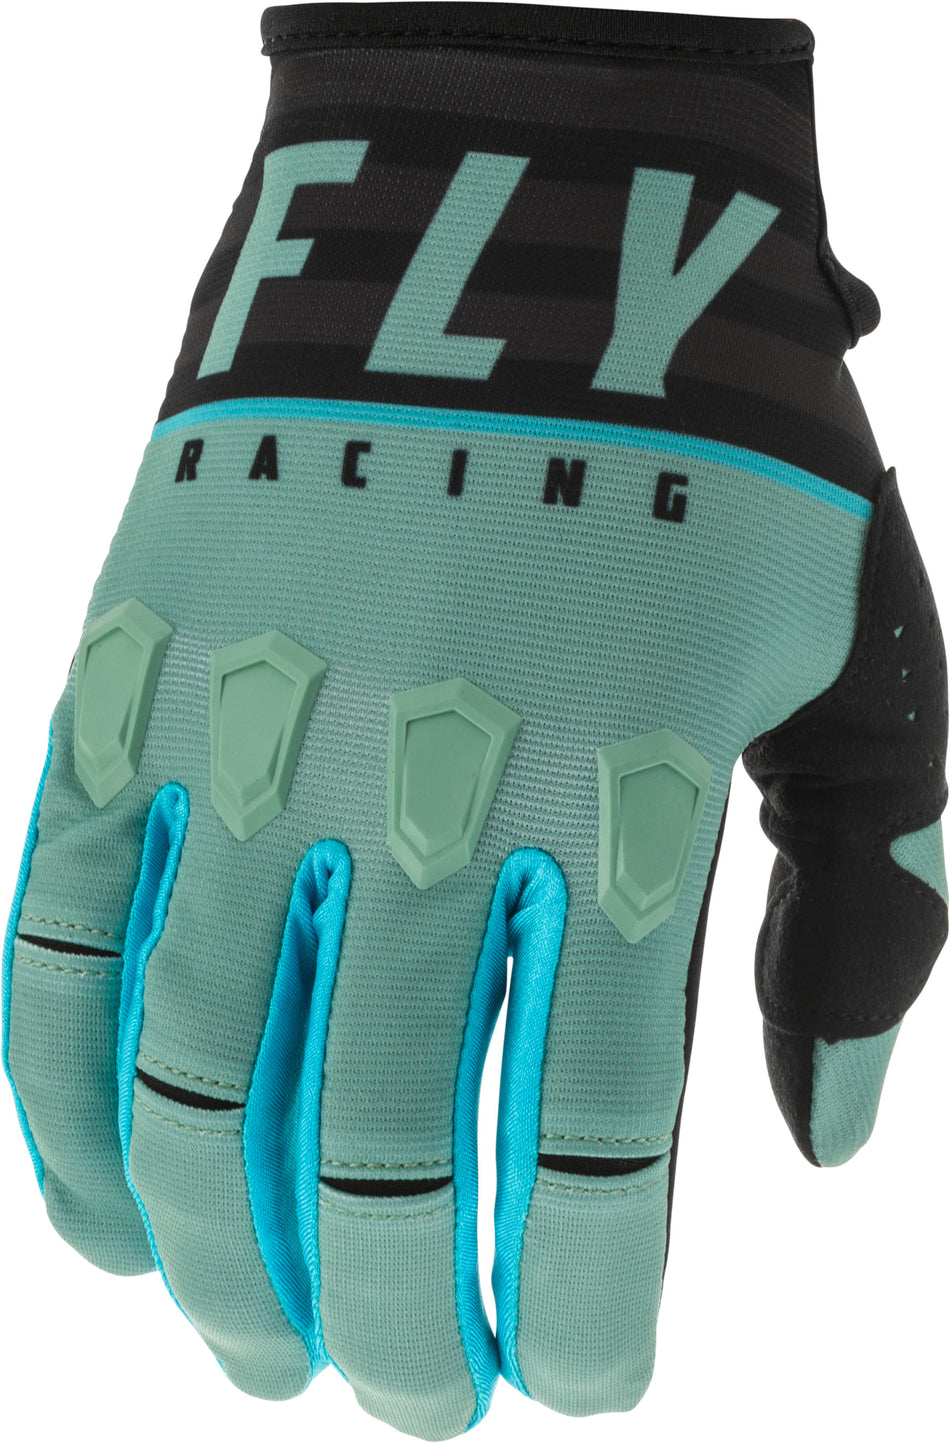 FLY RACING Kinetic K120 Gloves Sage Green/Black Sz 08 373-41608